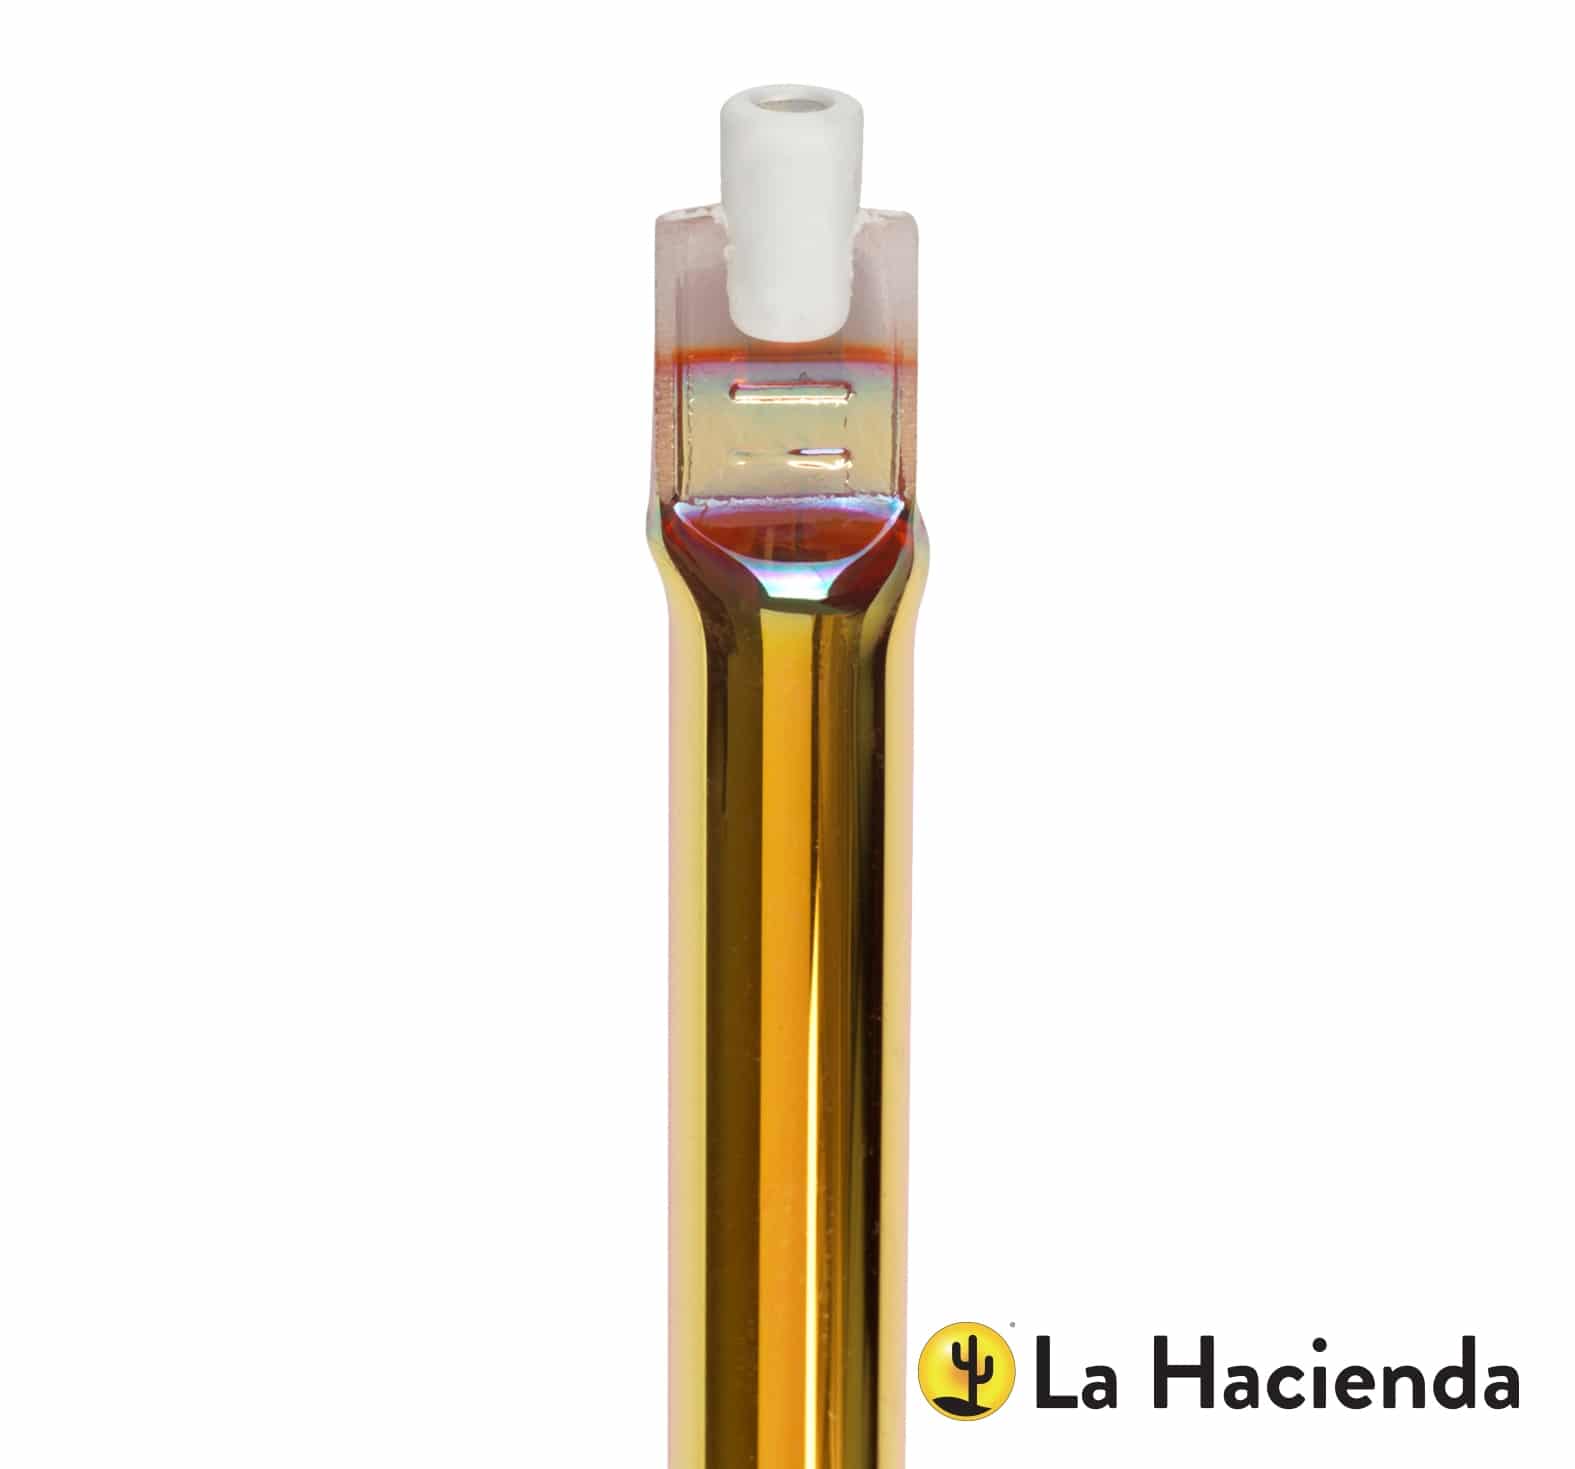 La Hacienda/Heatmaster replacement gold bulb UL2BG-R7S-800